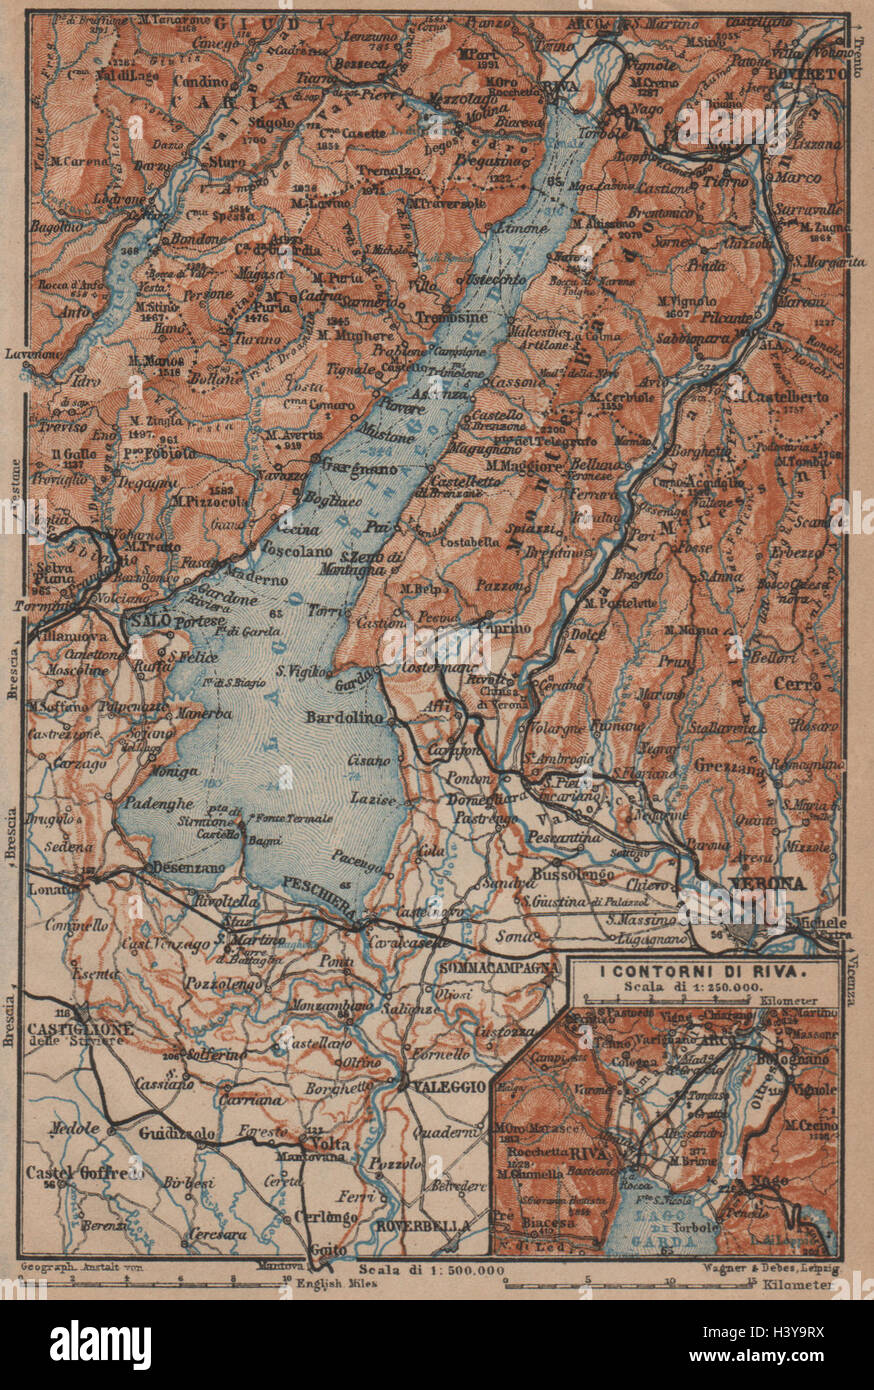 LAGO DI/LAKE GARDA. Riva Salo Peschiera Verona. topo-map. Italy mappa 1906 Stock Photo